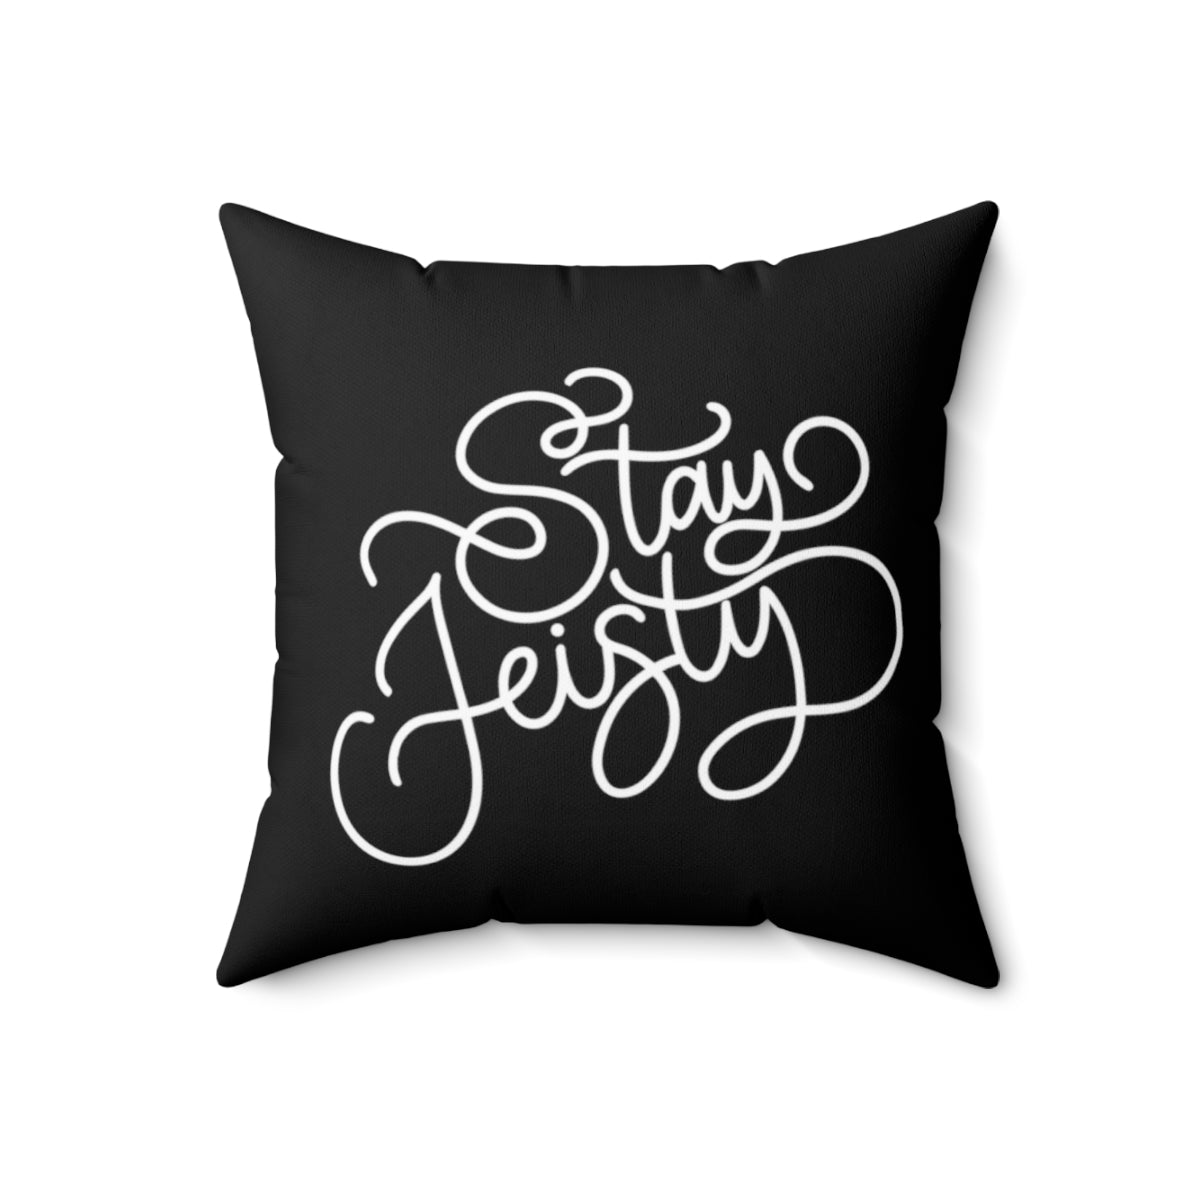 Stay Feisty (Black) - Pillow